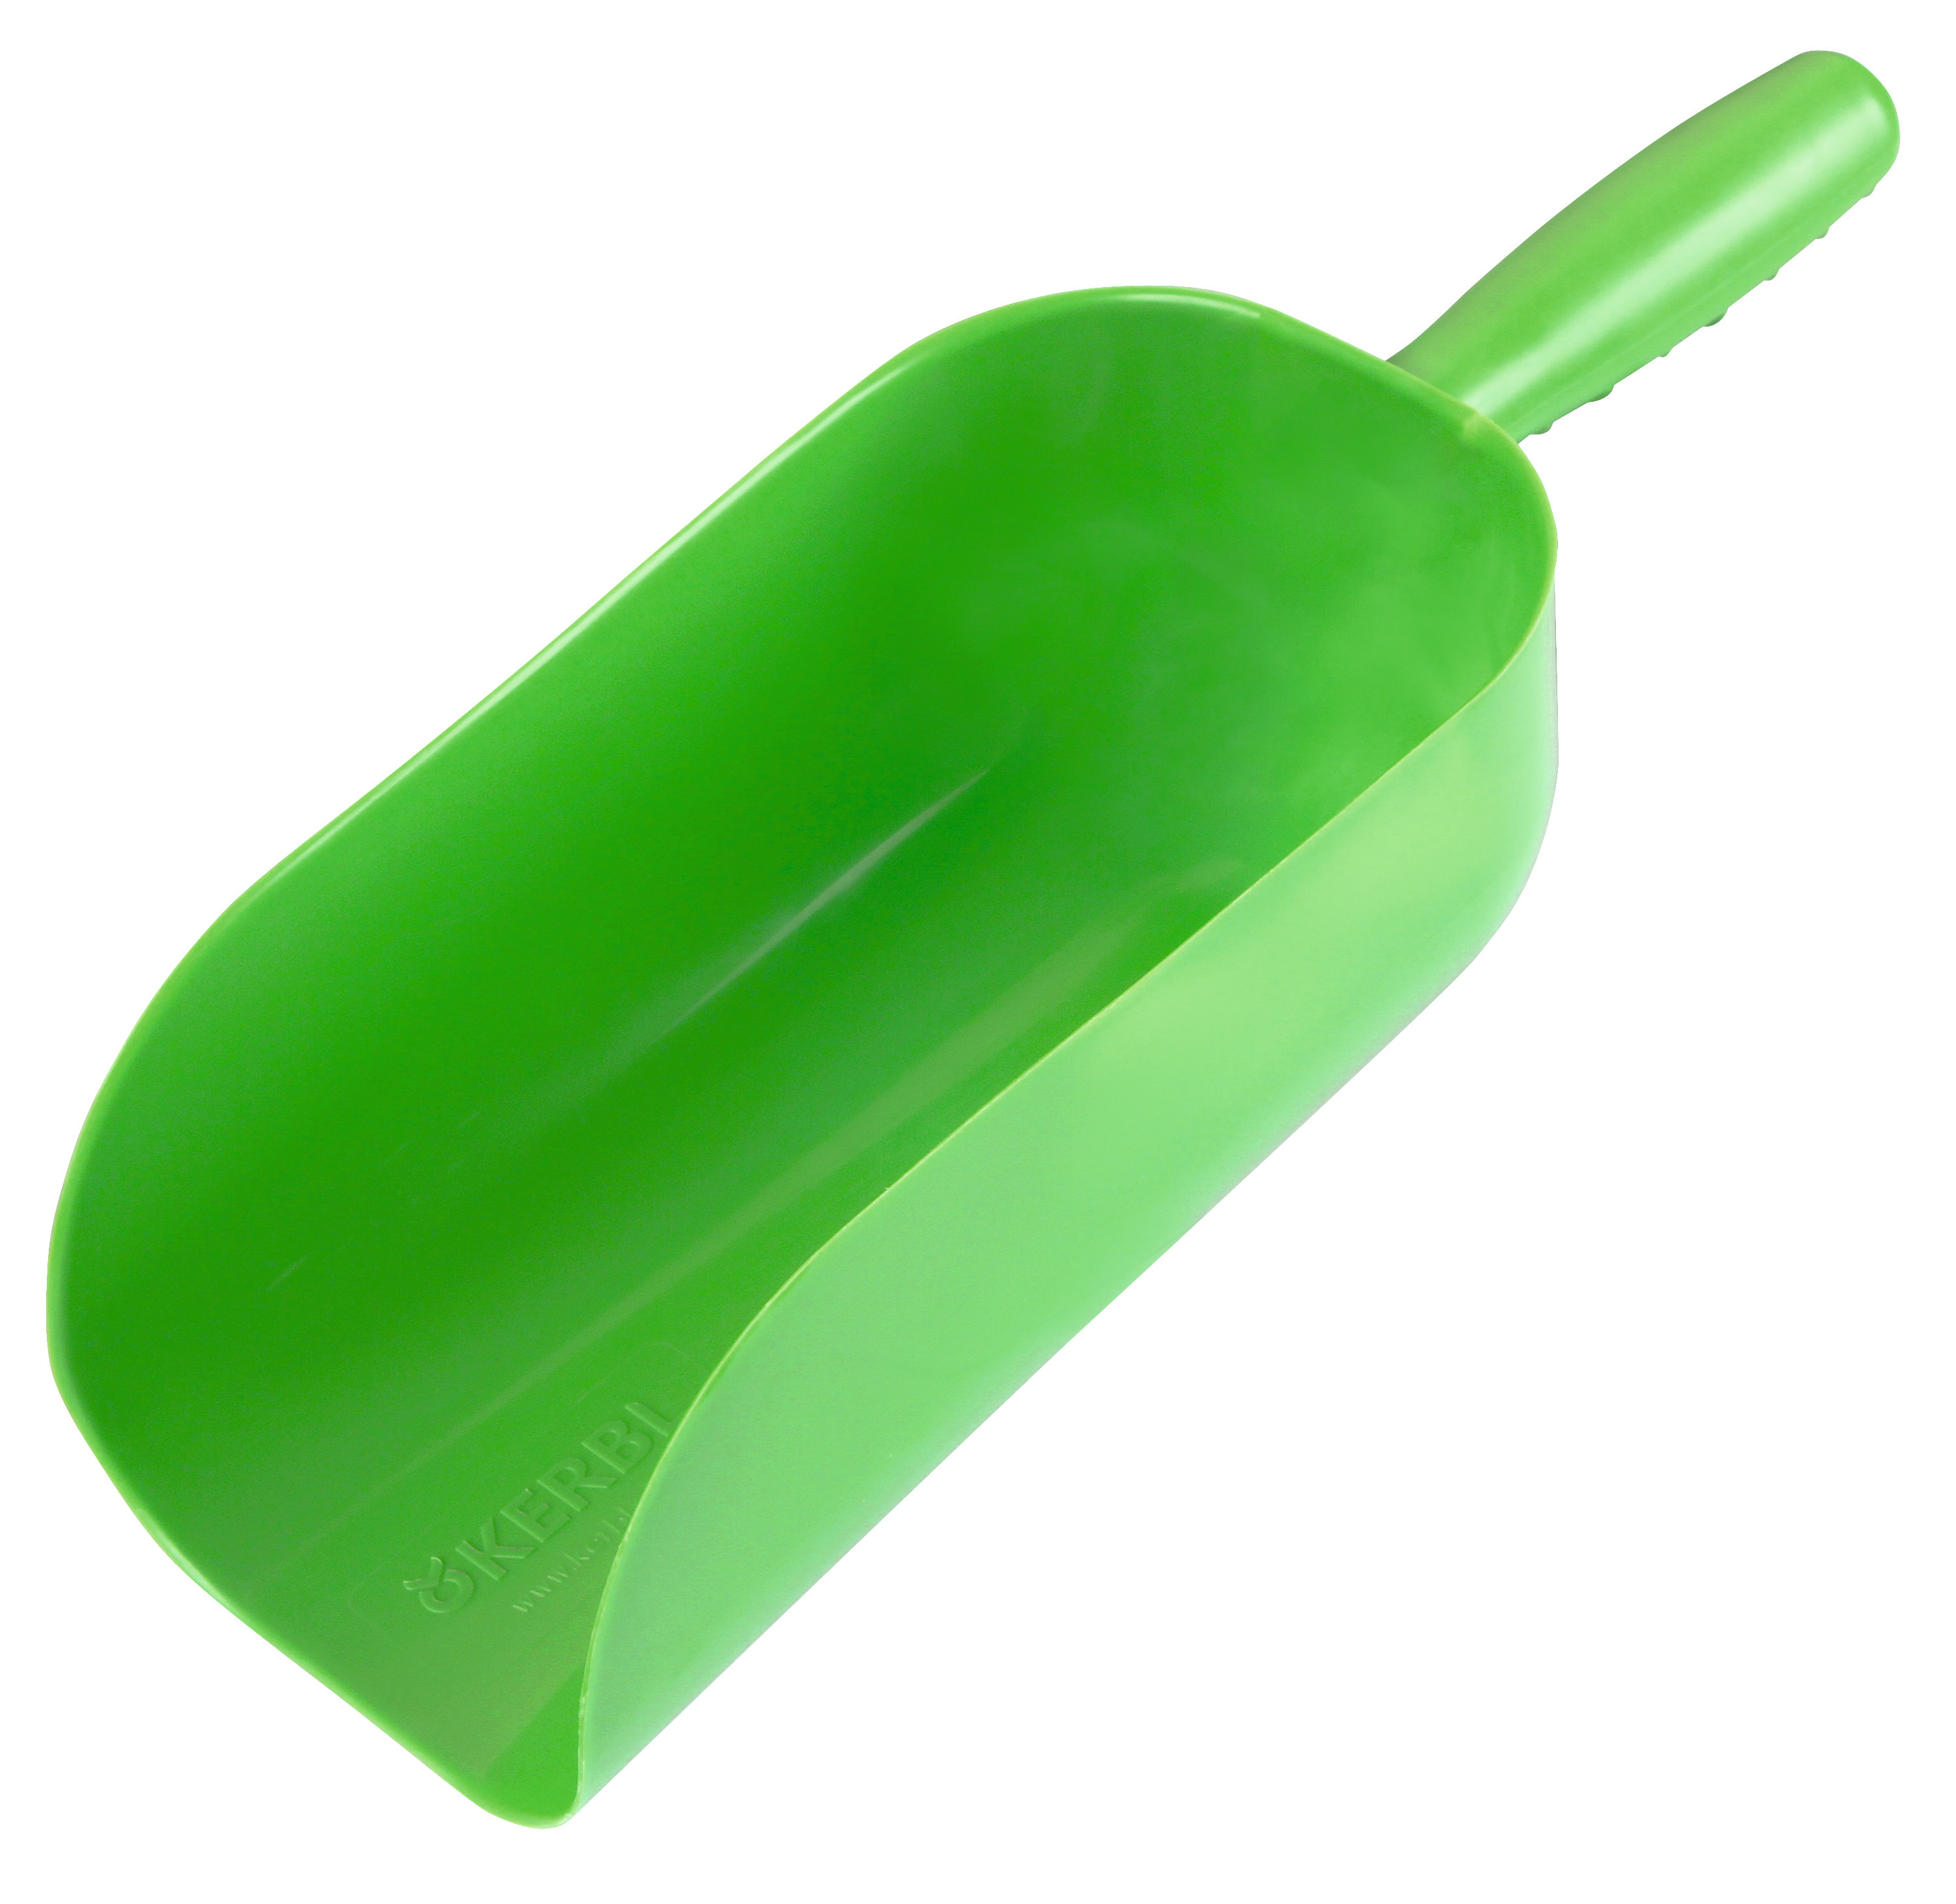 Futterschaufel KERBL aus grünem Kunststoff